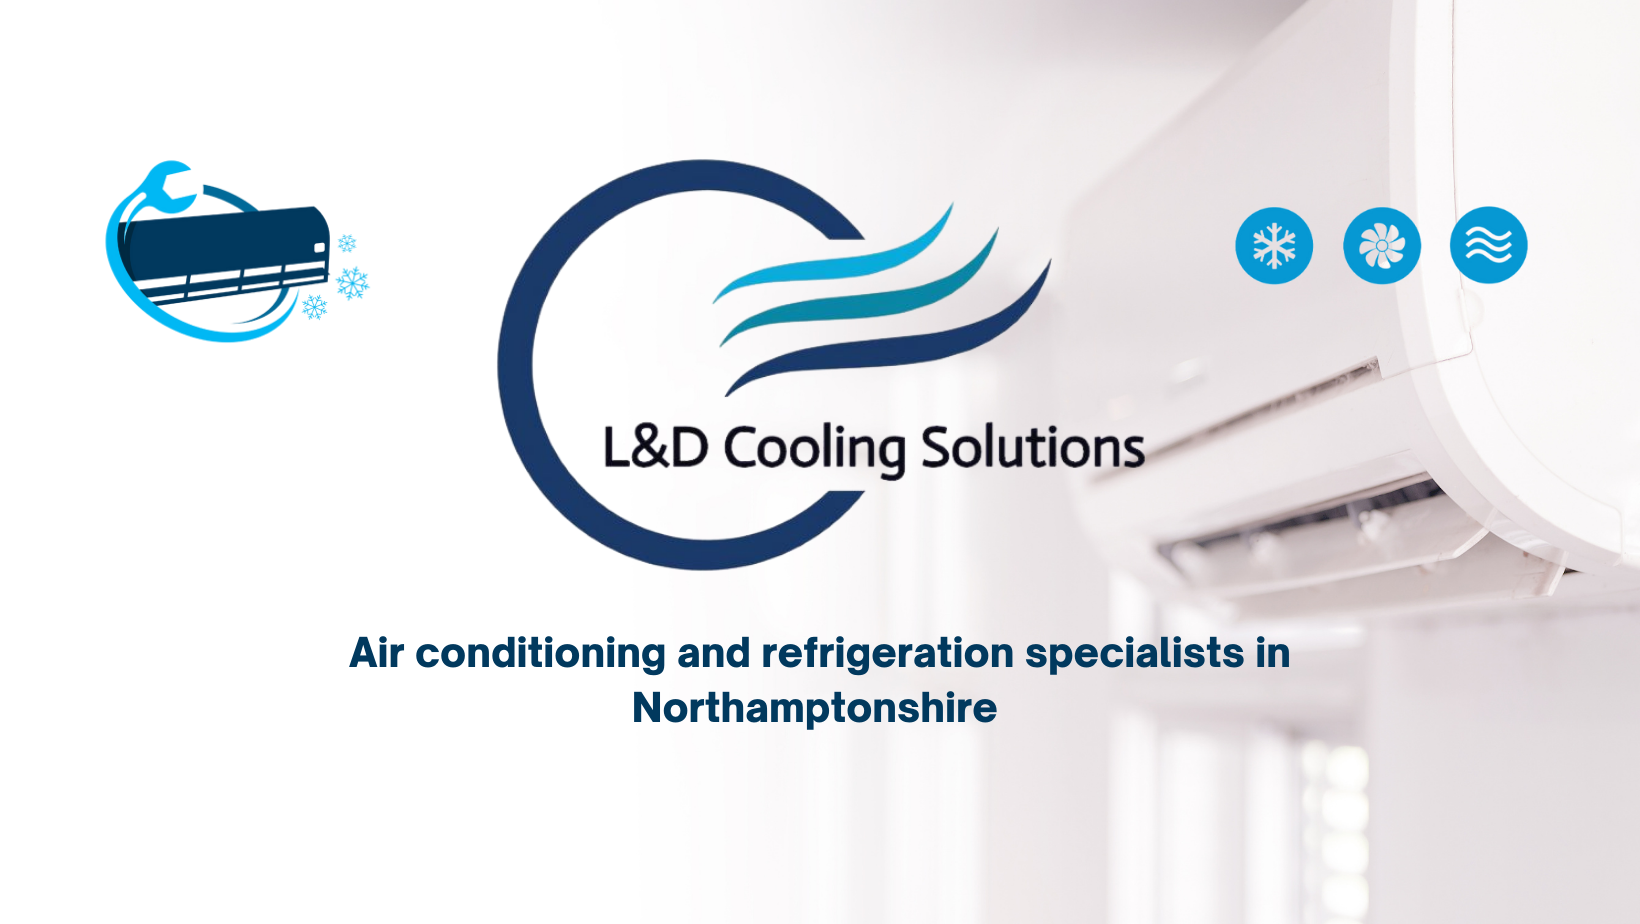 L&D Cooling Solutions